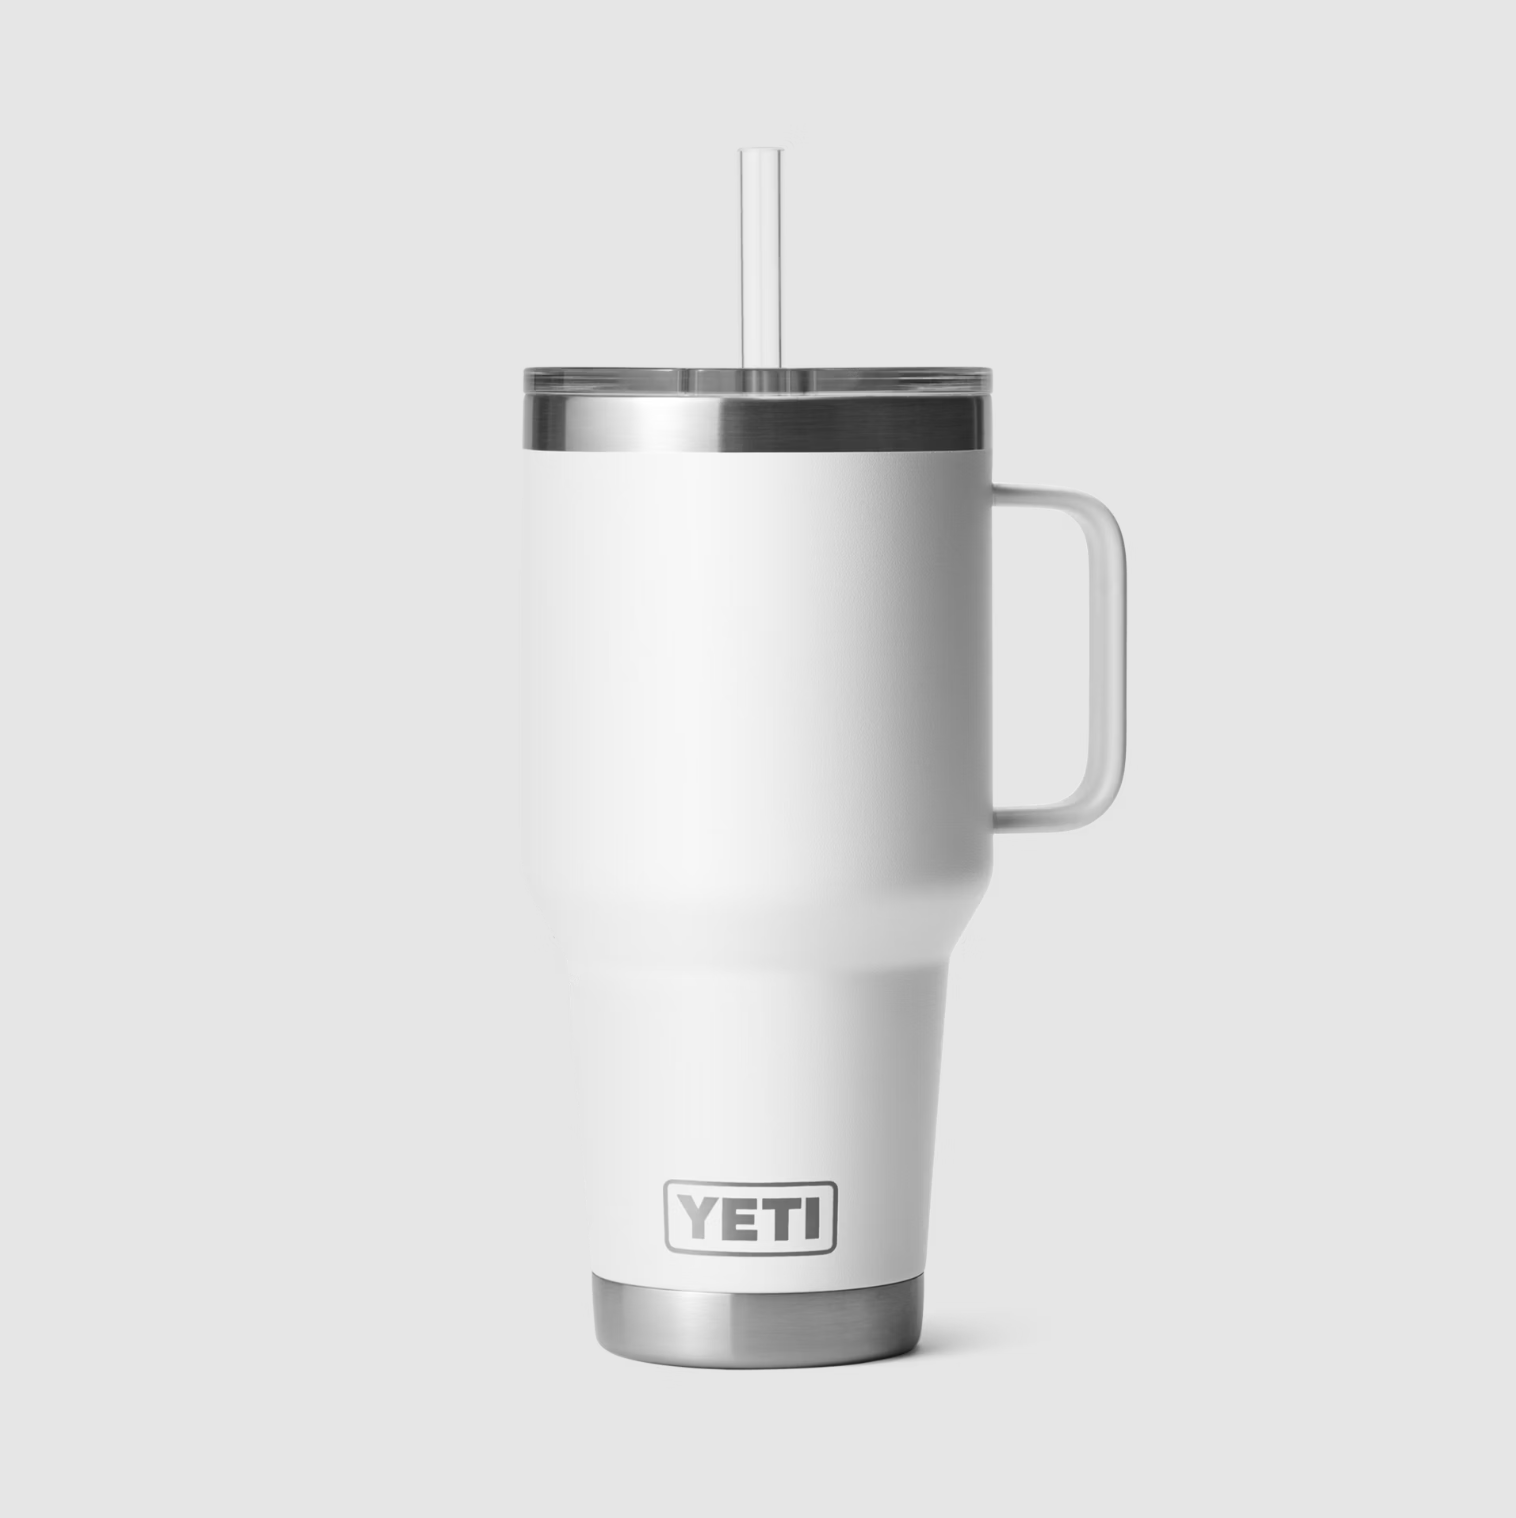 YETI - Rambler 35 oz Straw Mug - White